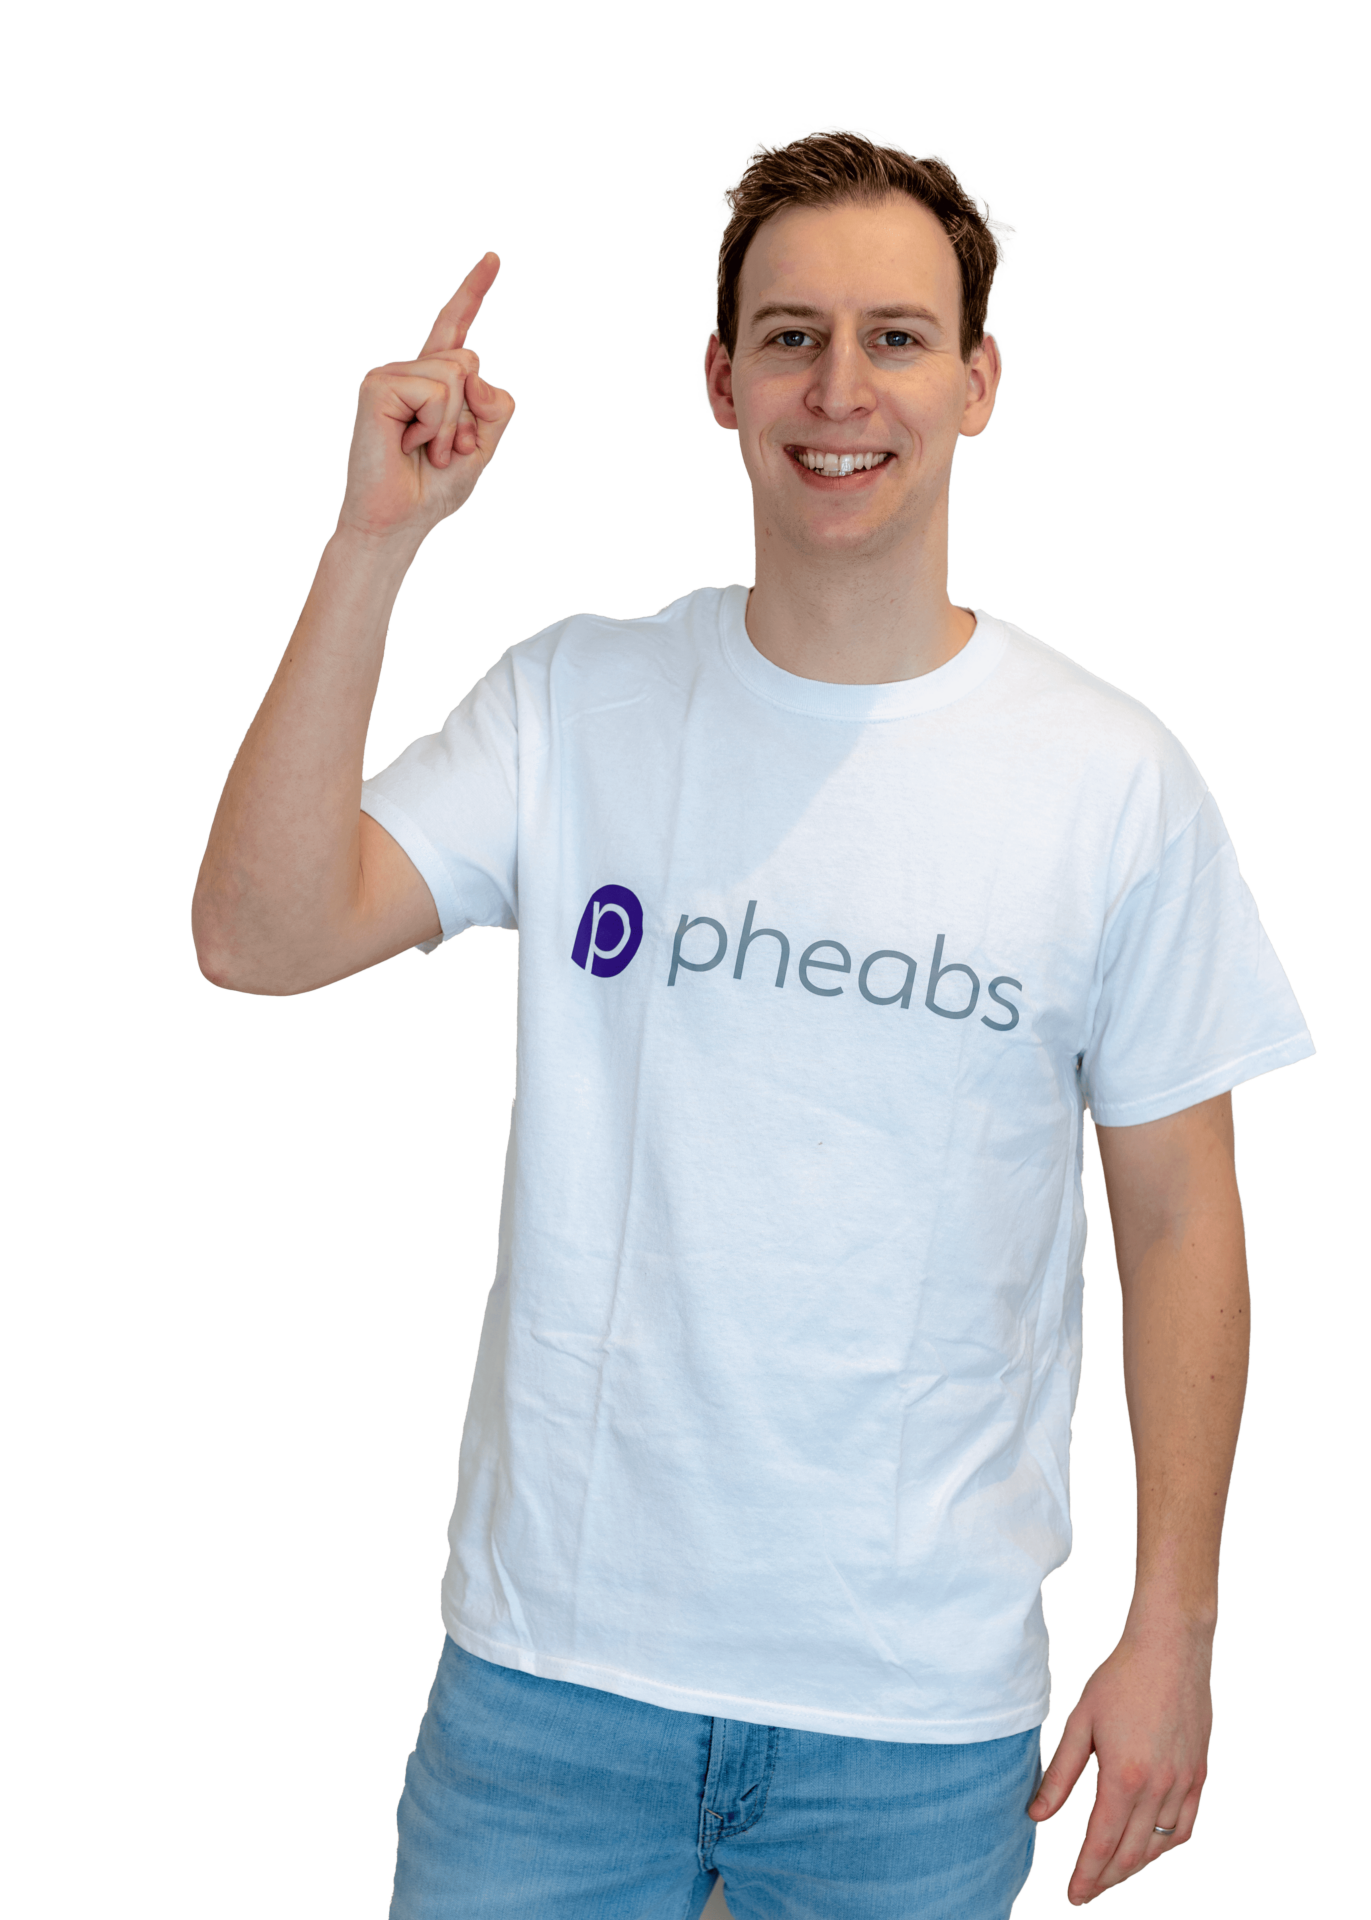 Pheabs Founder